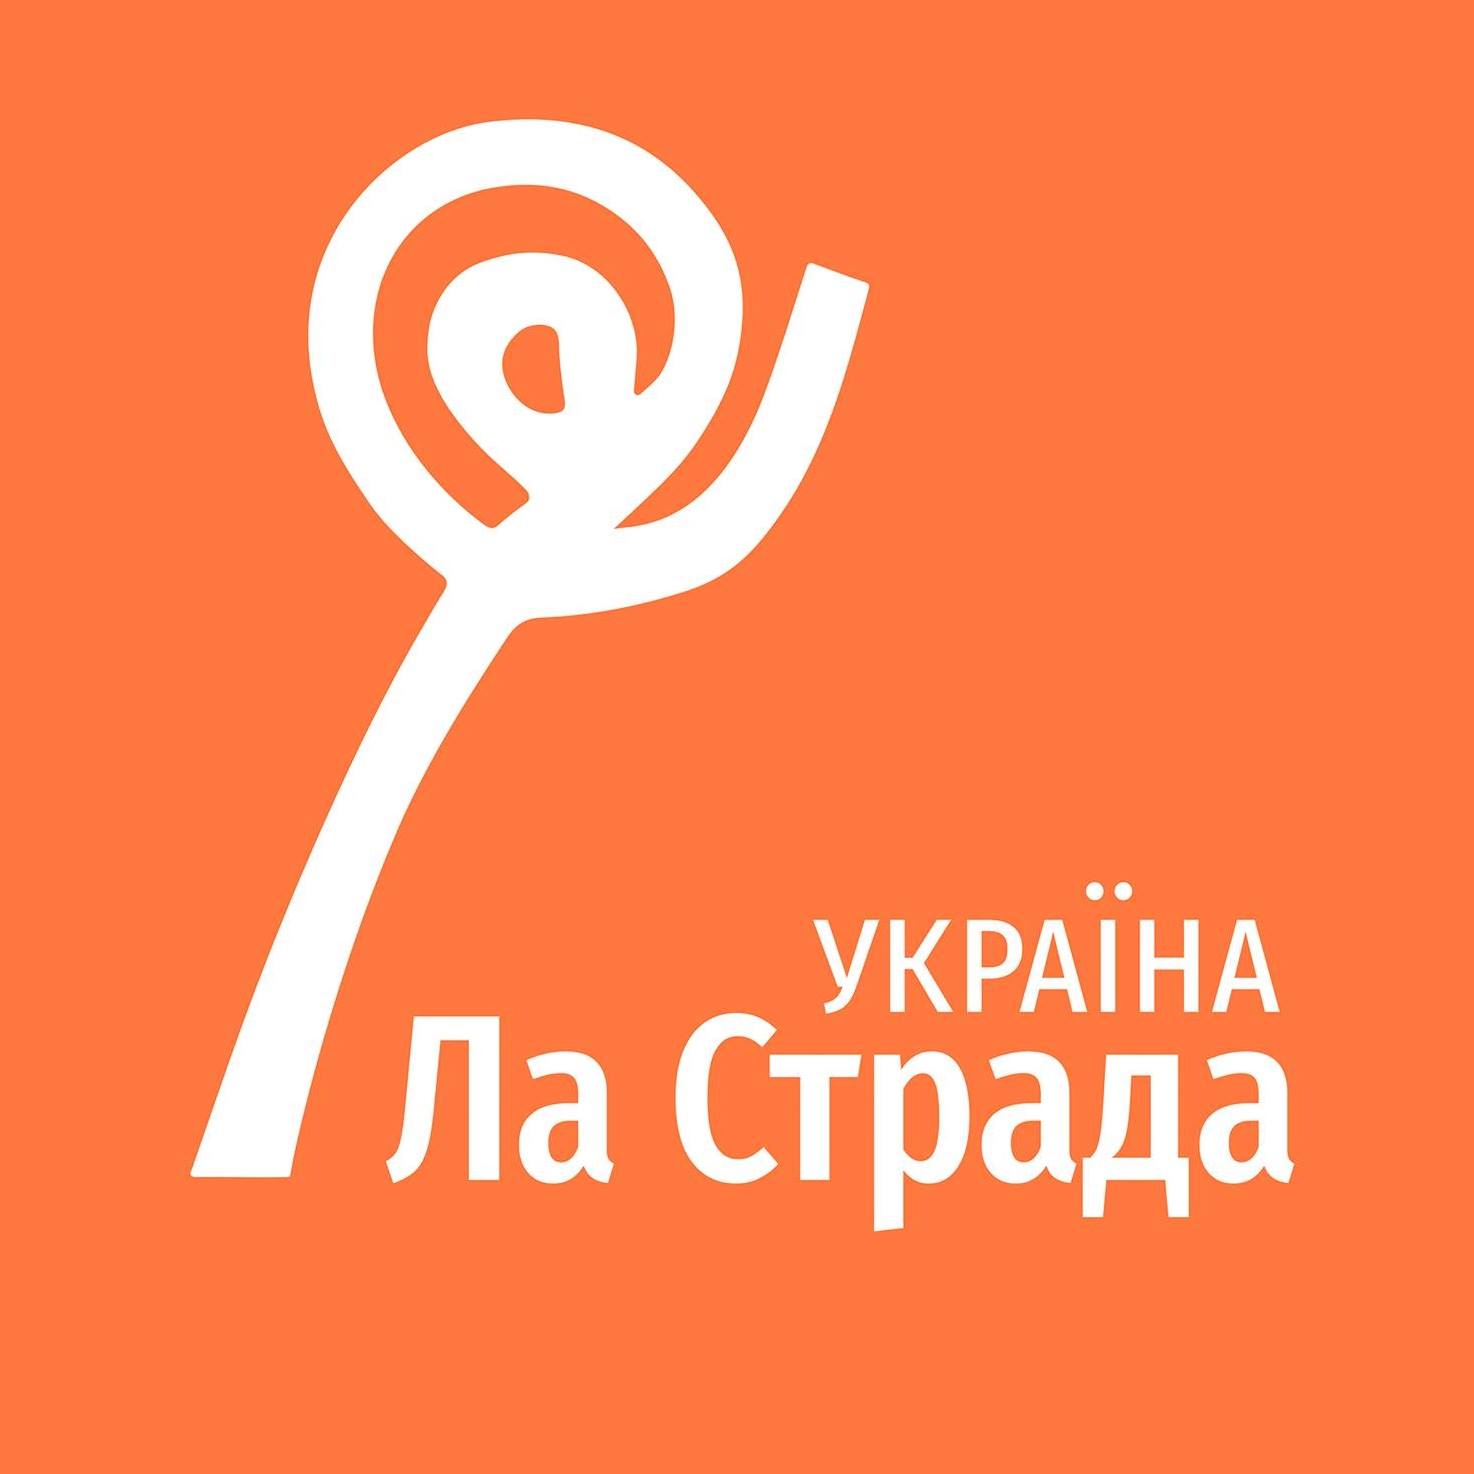 UKRAINE CAMPAIGN English language » STOP THE TRAFFIK
